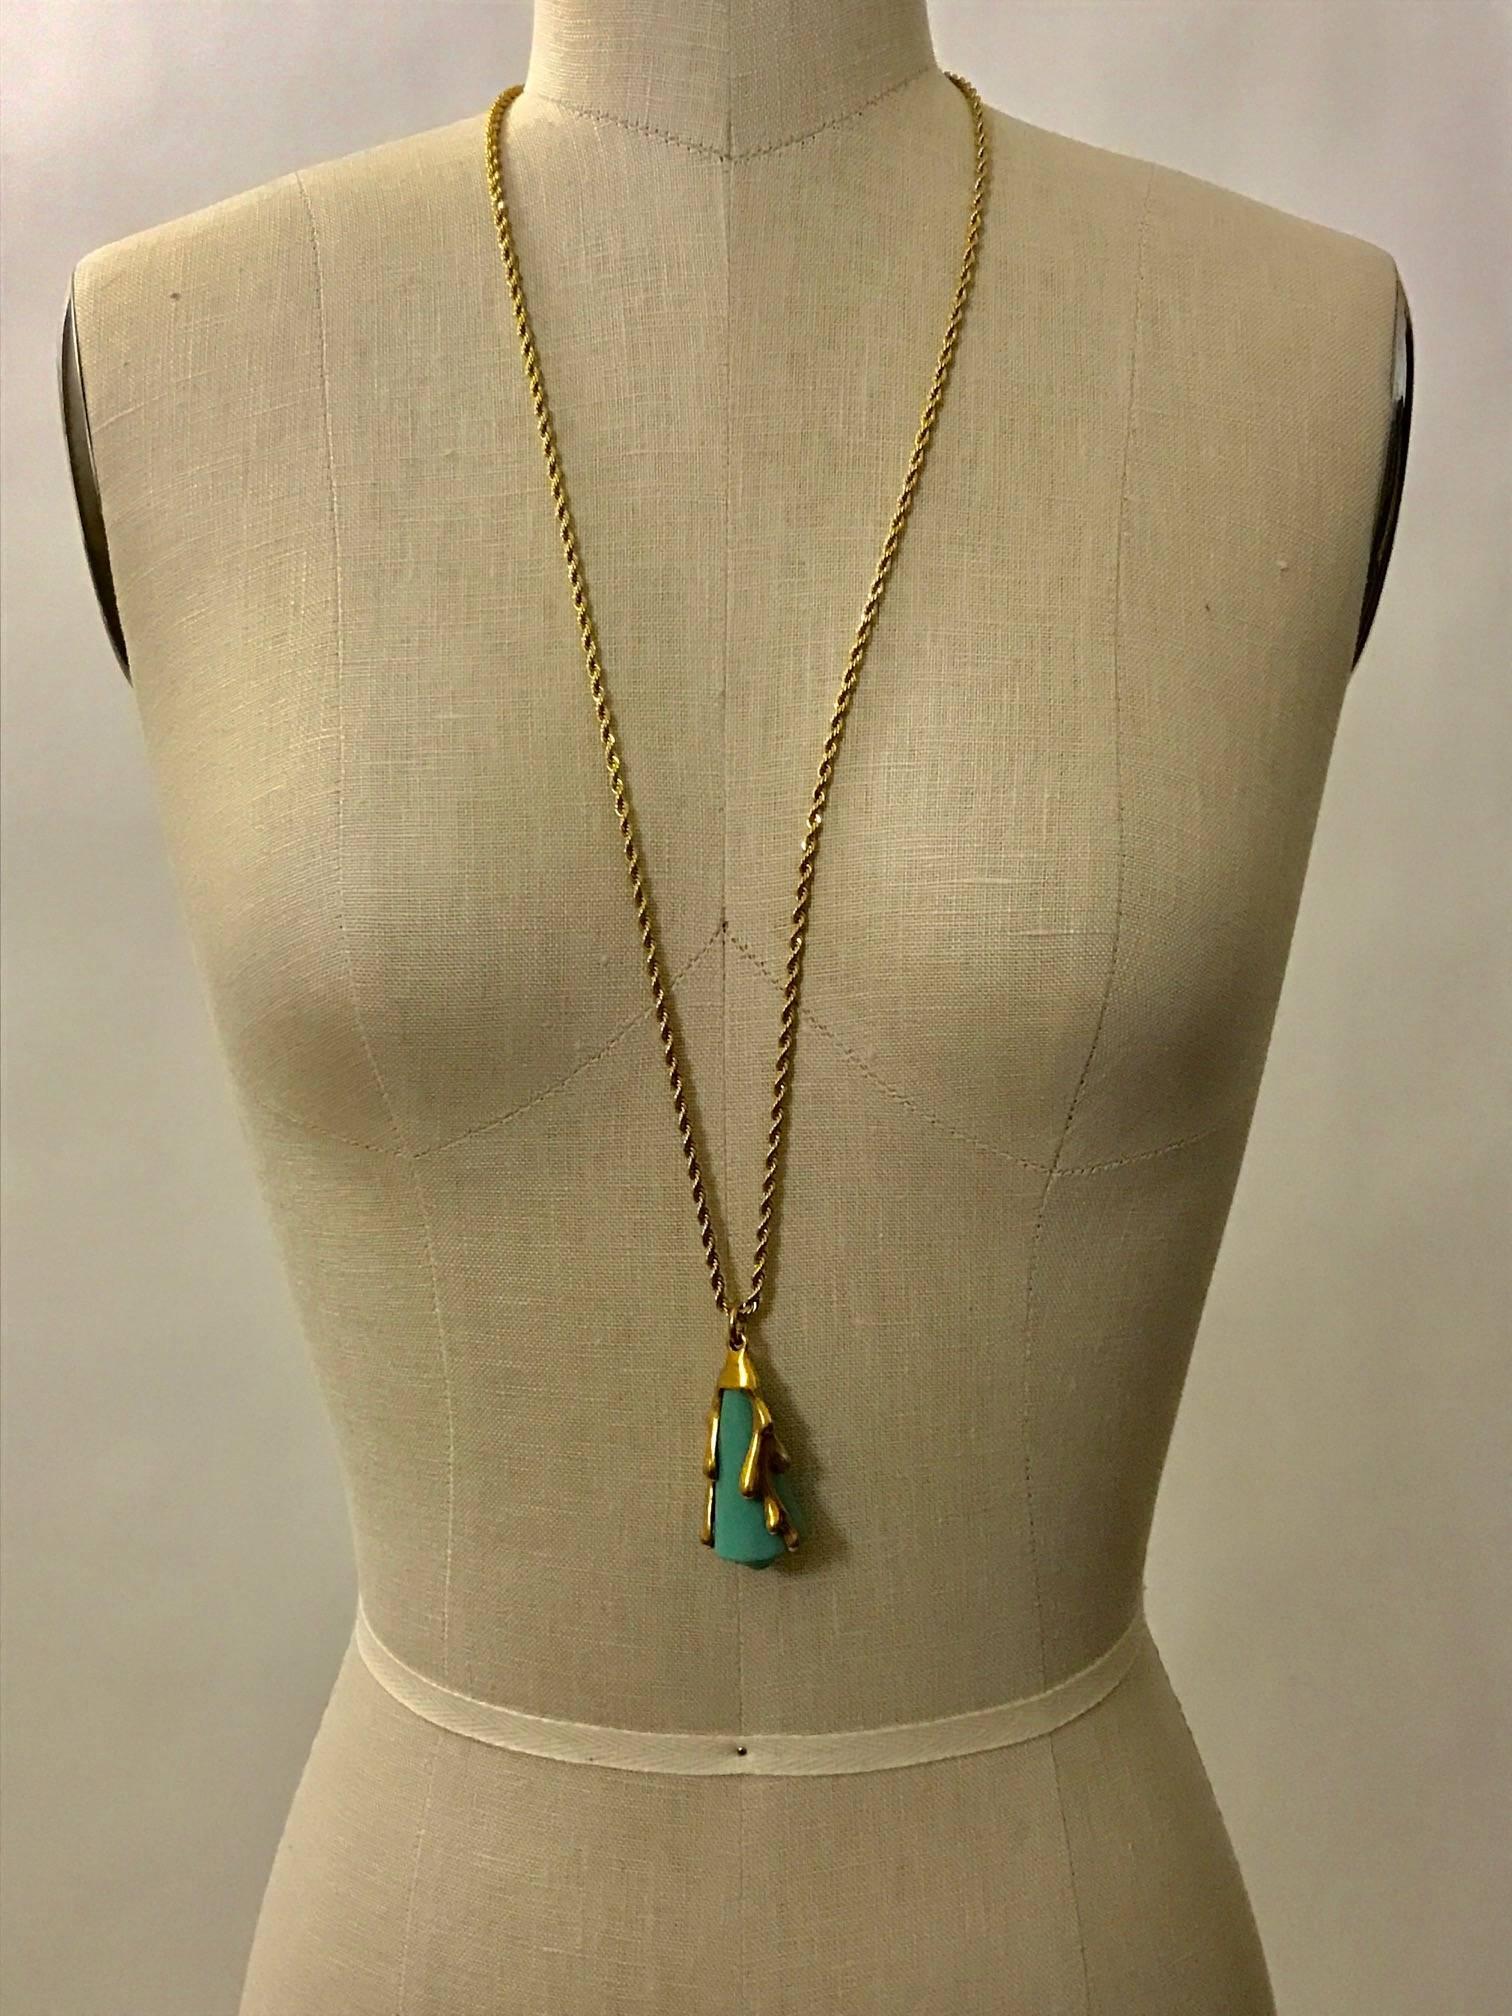 Oscar de la Renta gold tone necklace features coral holding a turquoise shell.

Signed 'Oscar de la Renta' at tag.

Pendant measures approximately 2